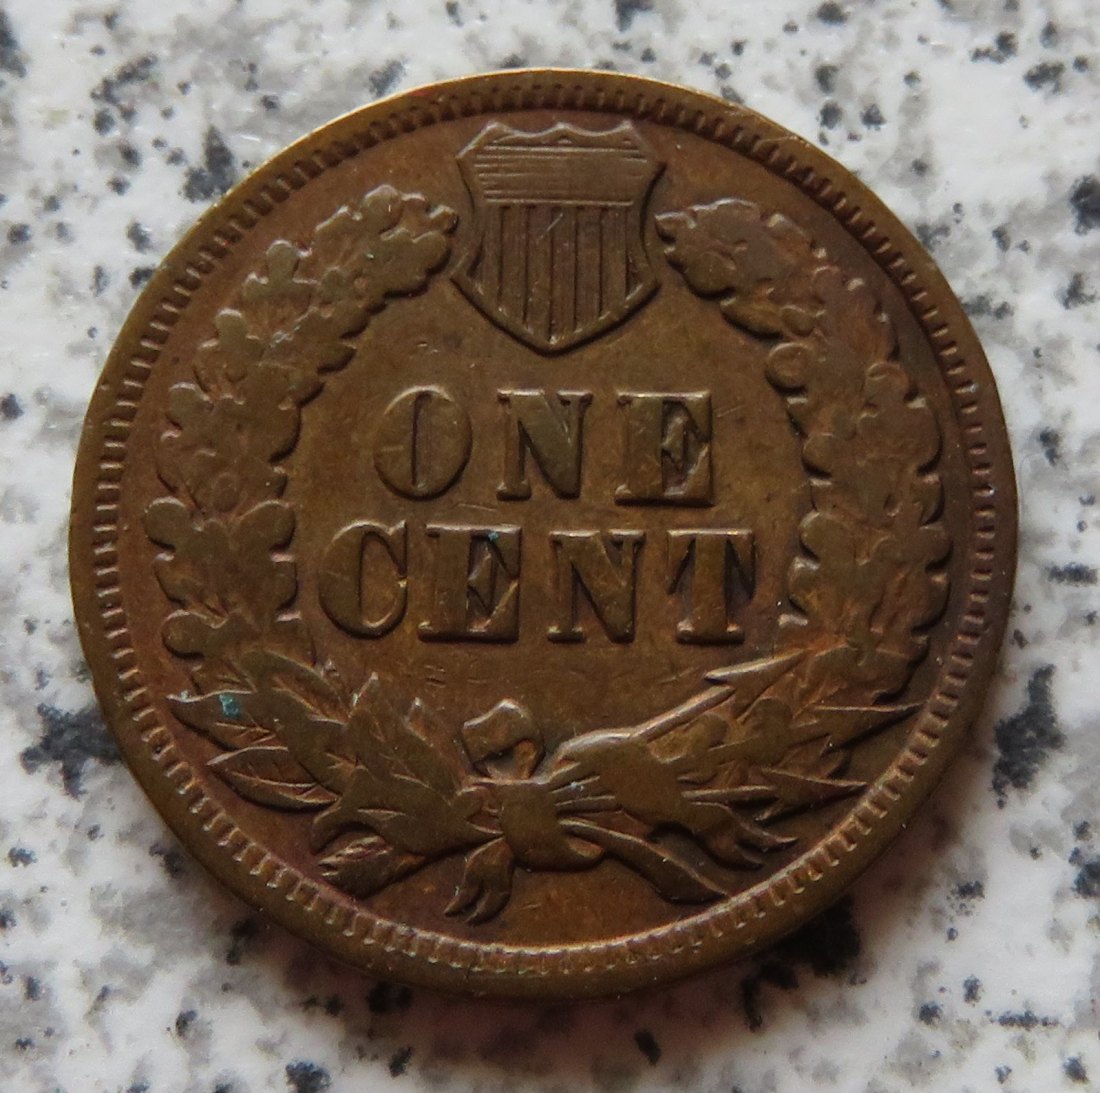  USA Indian Head Cent 1903   